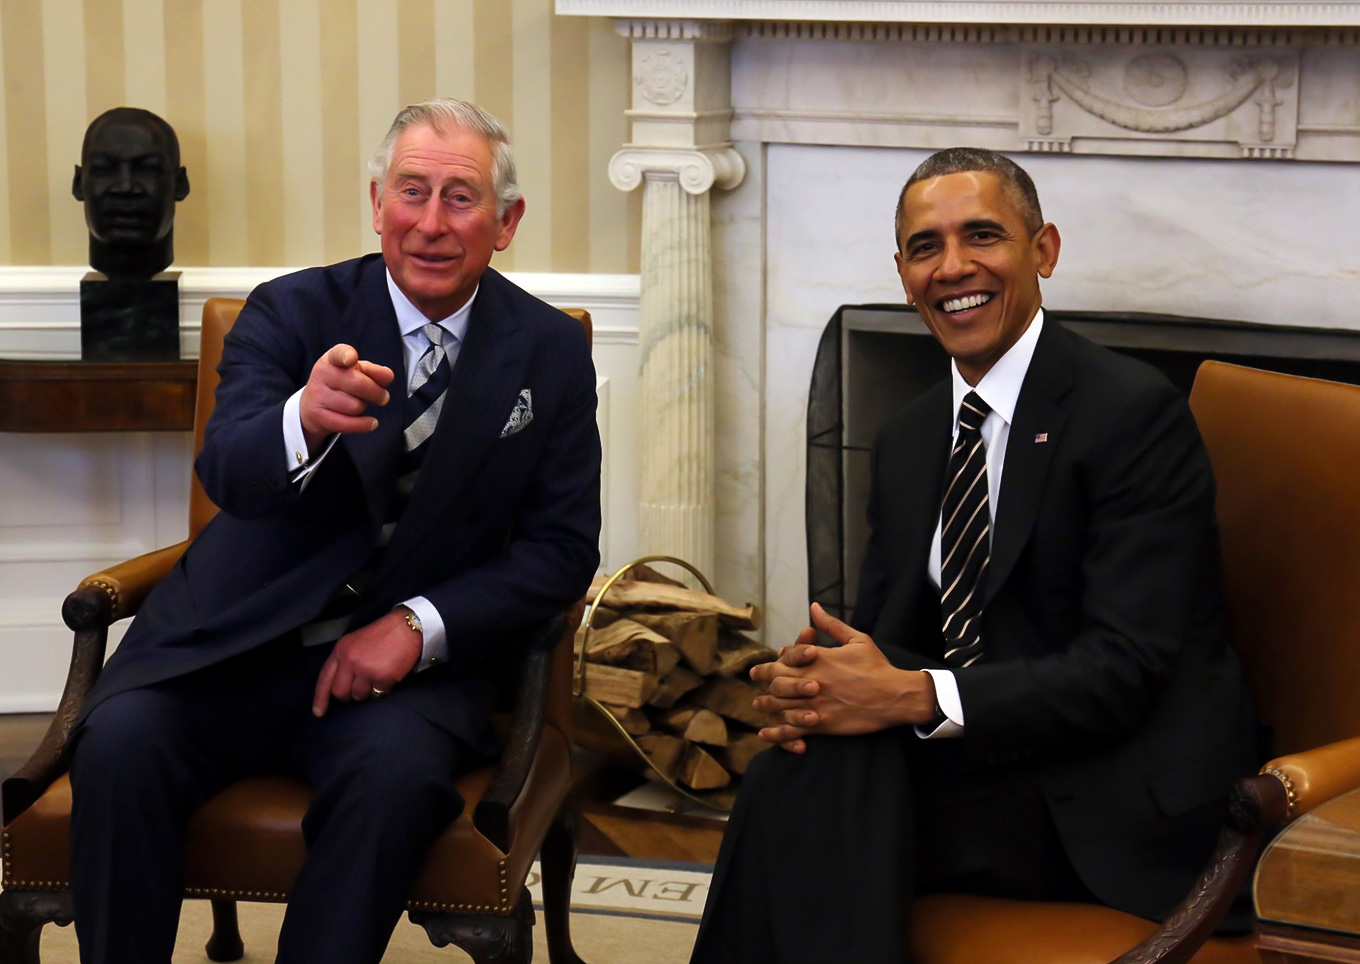 Prince Charles with Barack Obama, 2015